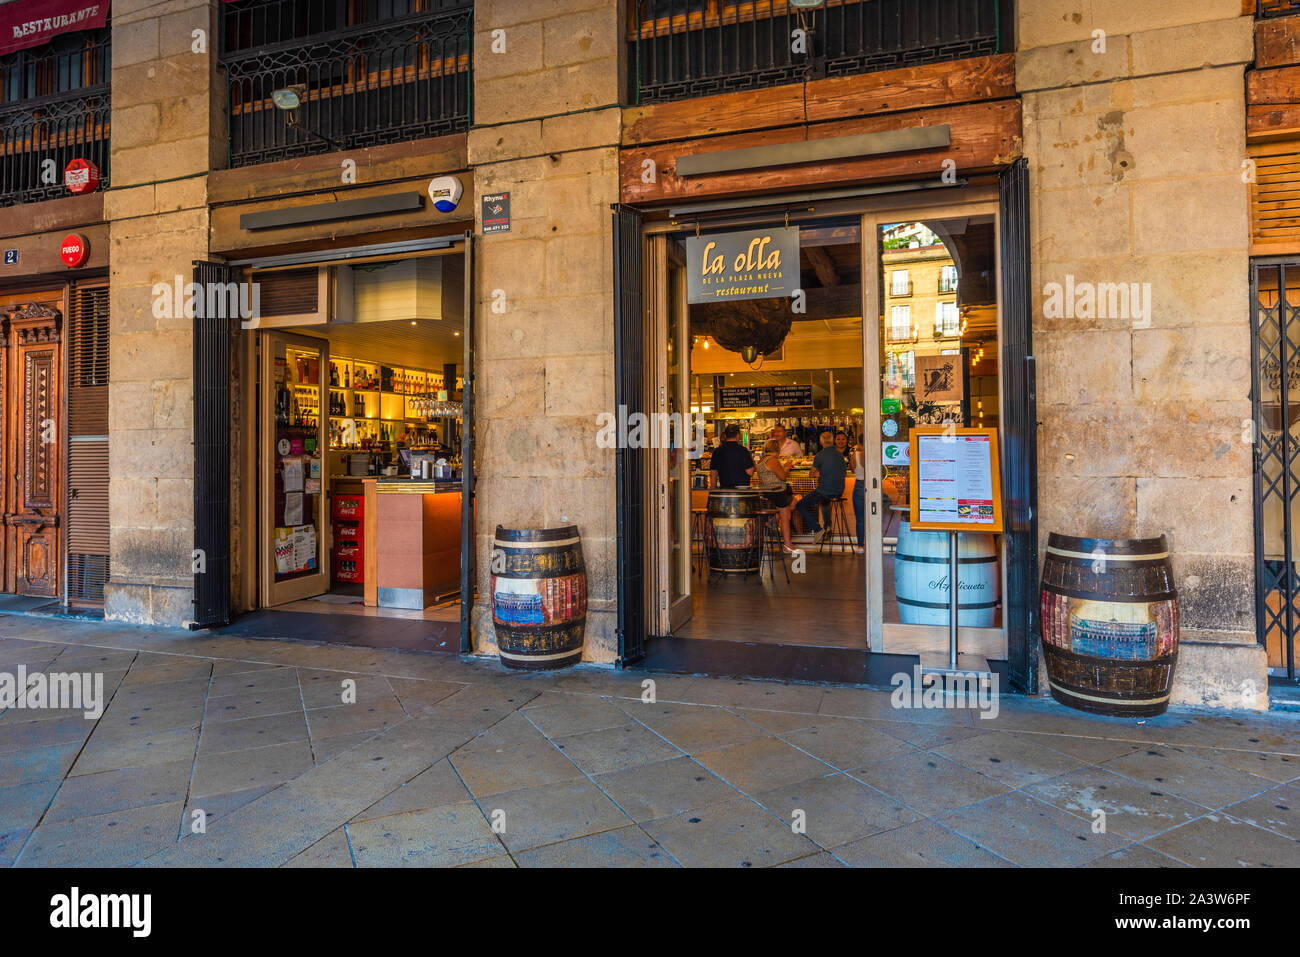 16/09-19, Bilbao, Spain. Facade of the award winning pintxos bar la Olla de la Plaza Nueva. Stock Photo